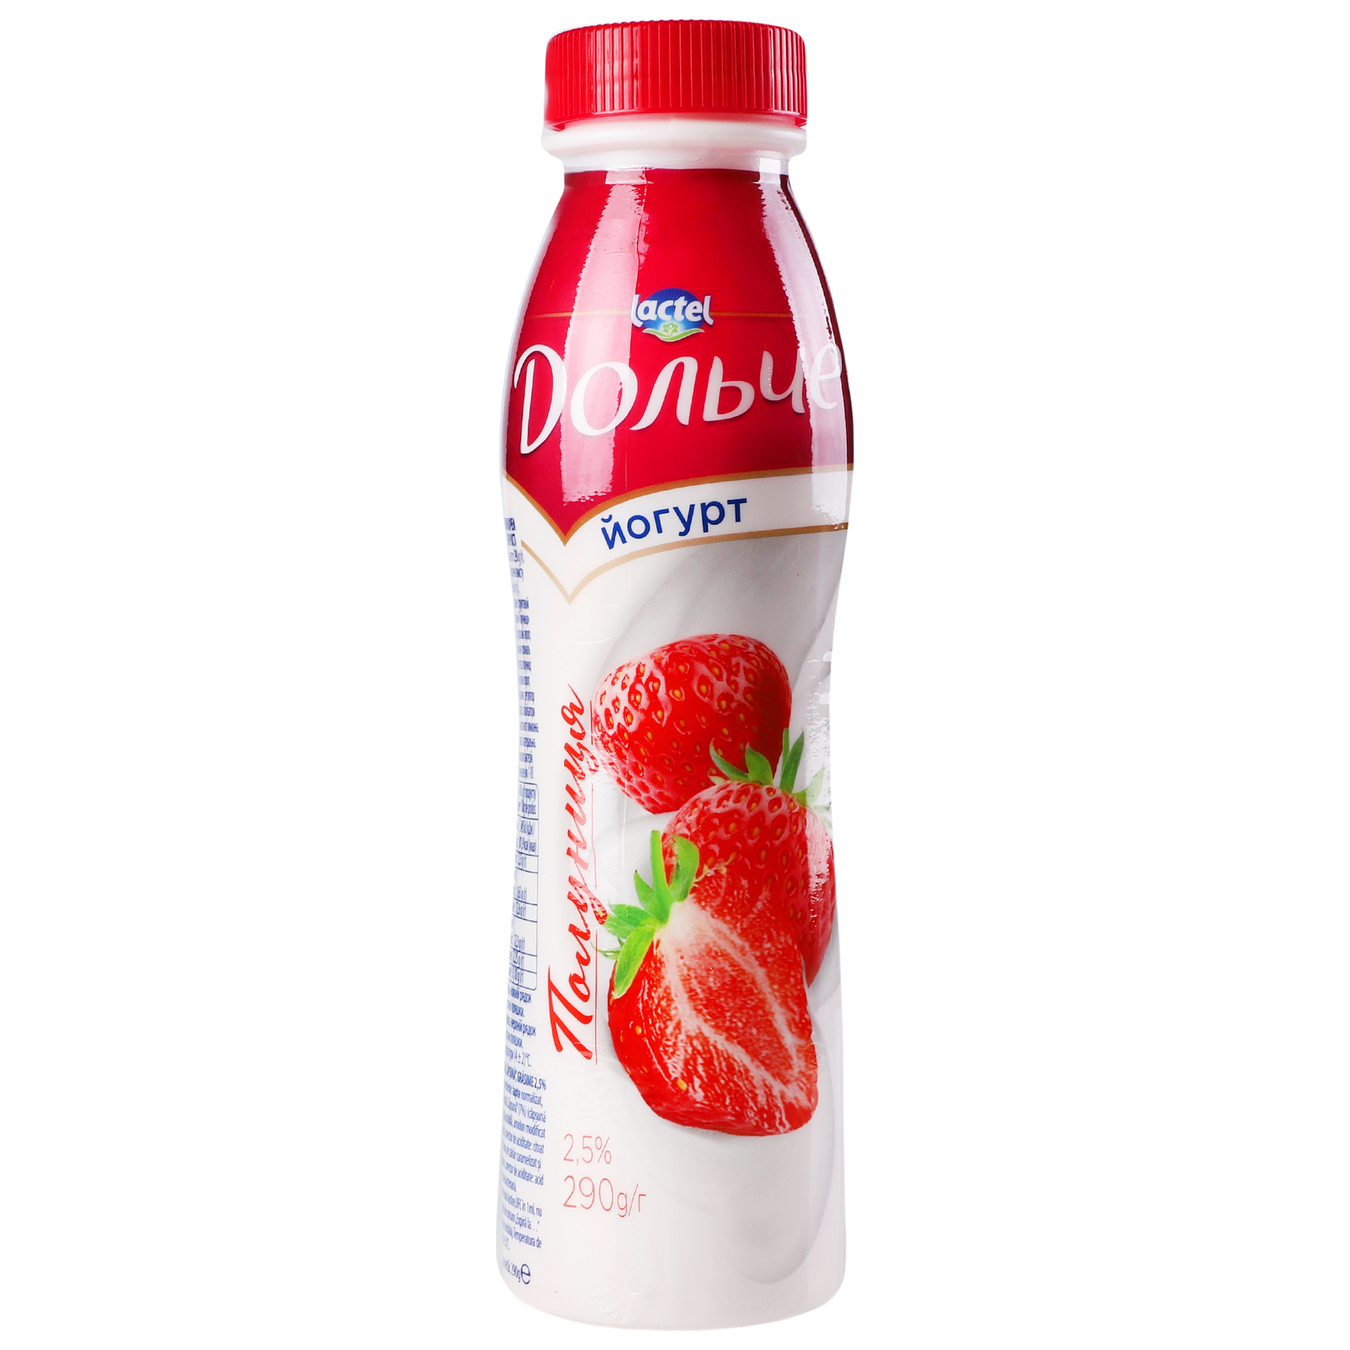 Lactel Dolce Strawberry Flavored Yogurt 2,5% 290g